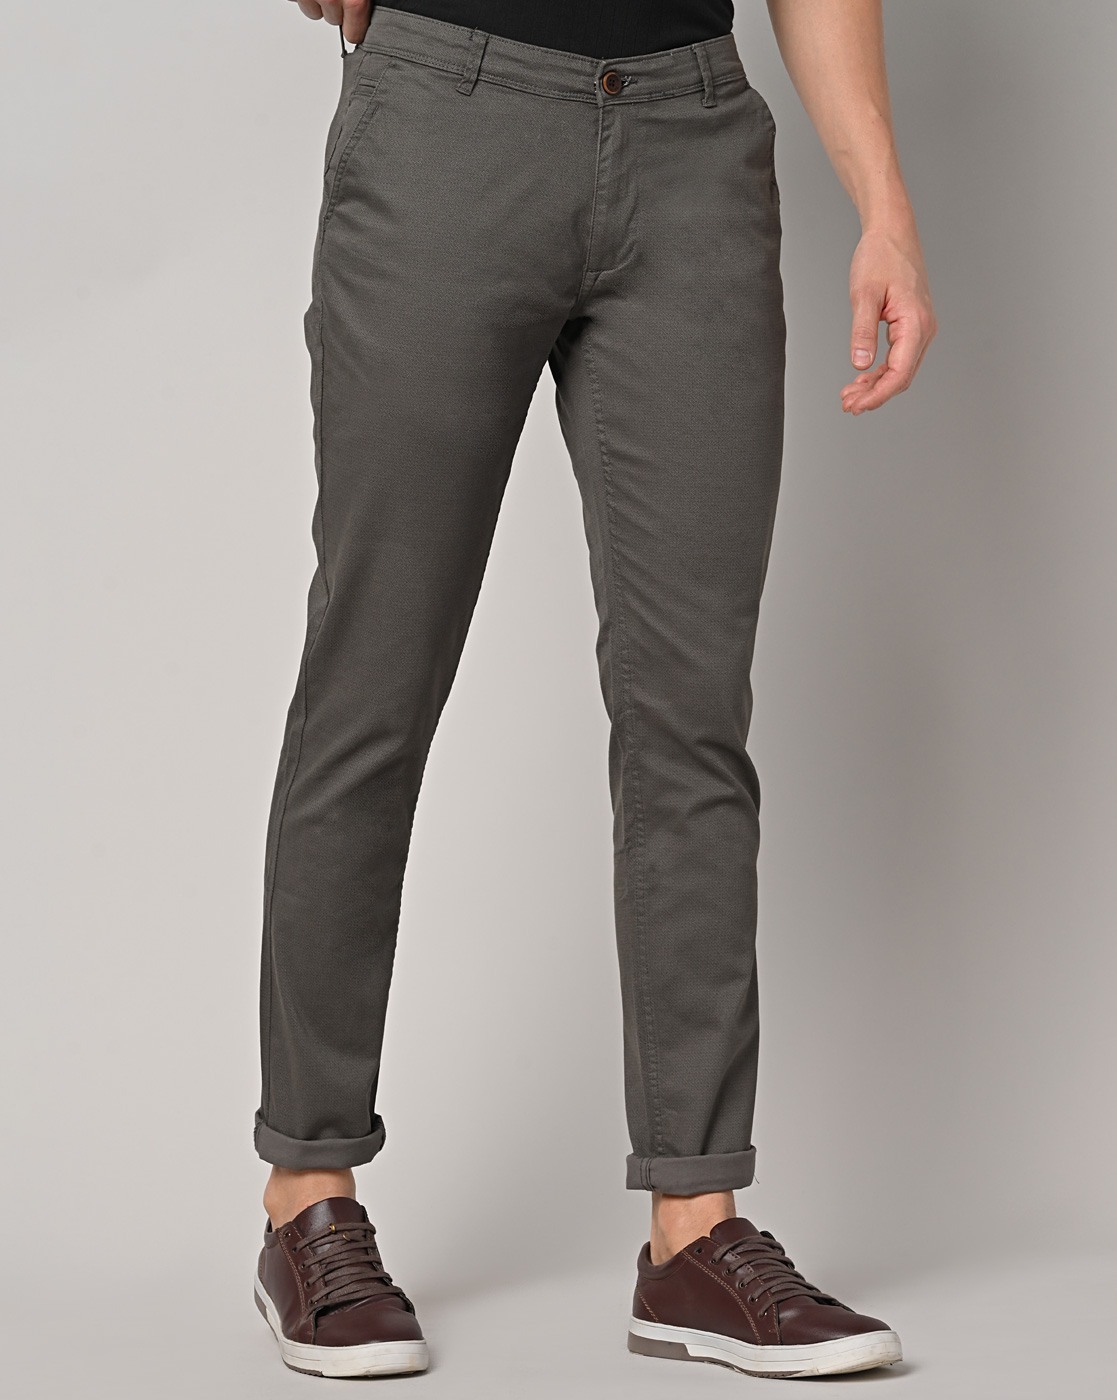 Dark grey classic matty trousers  FormalsExecutive  Trousers  CORPORATE